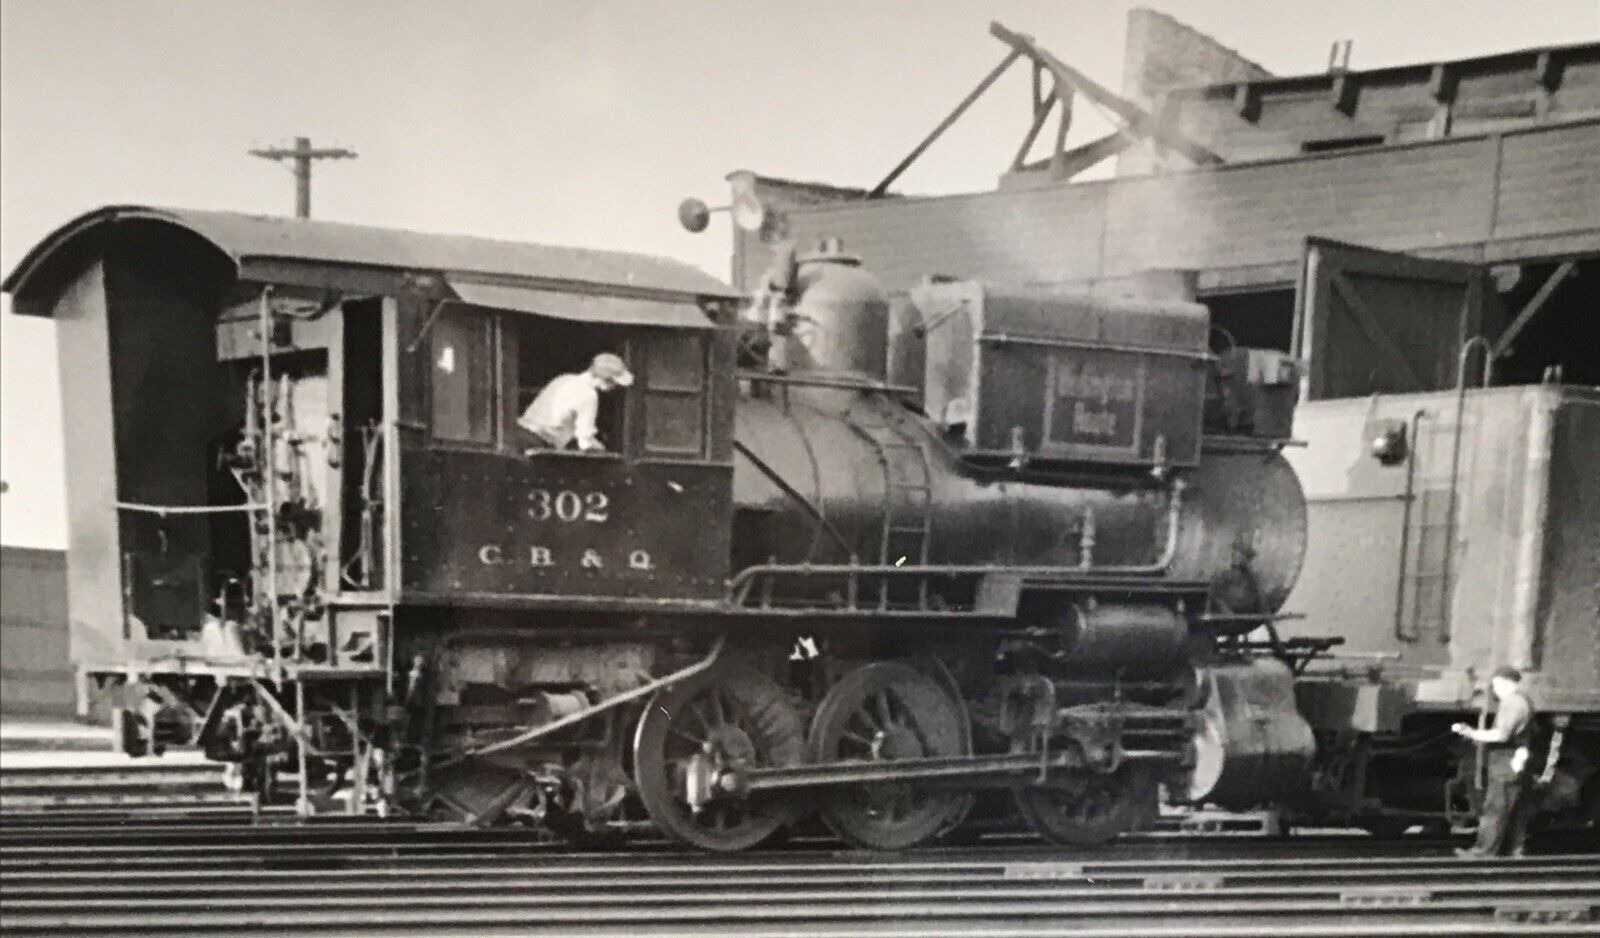 Chicago Burlington & Quincy Railroad CBQ CB&Q #302 0-6-0 Locomotive Photo 1948